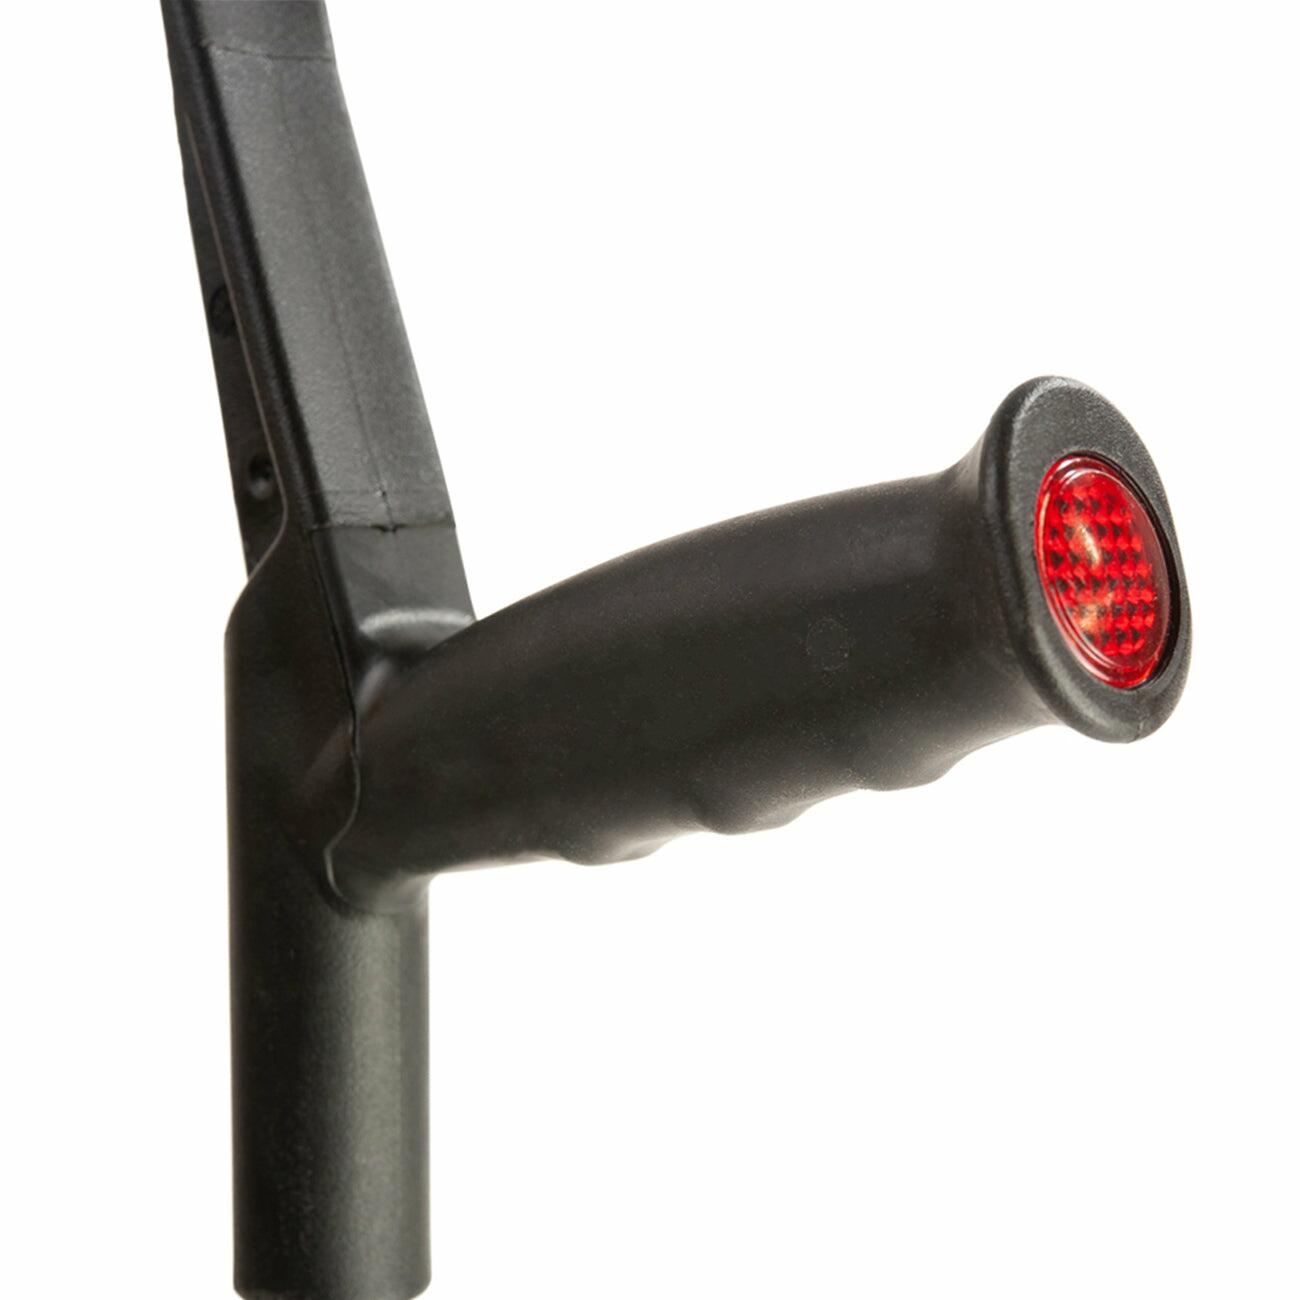 Soft grip handle of the Flexyfoot Soft Grip Open Cuff Crutch